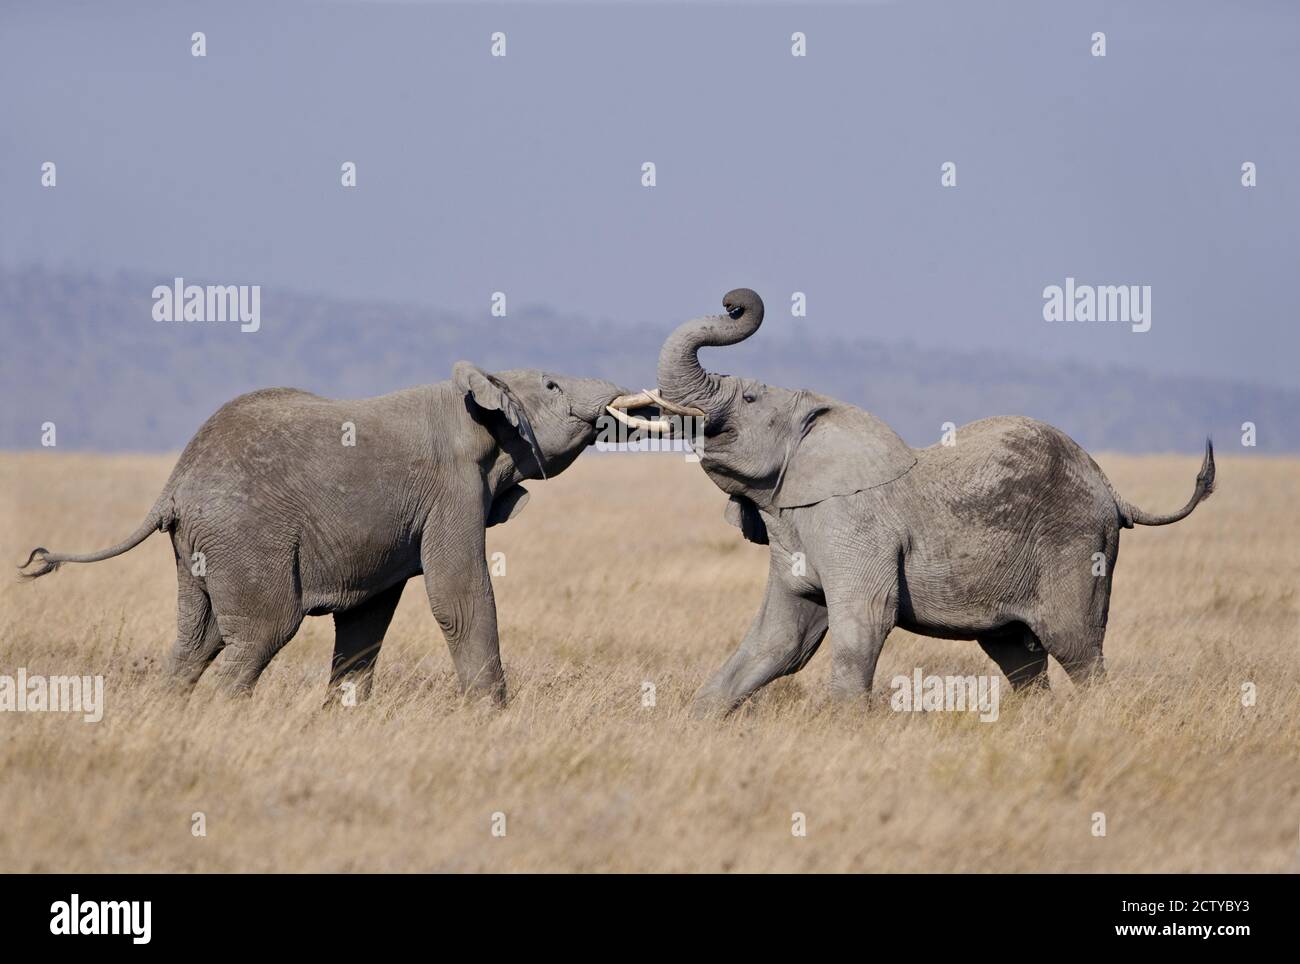 Zwei afrikanische Elefanten (Loxodonta africana) kämpfen auf einem Feld, Tansania Stockfoto